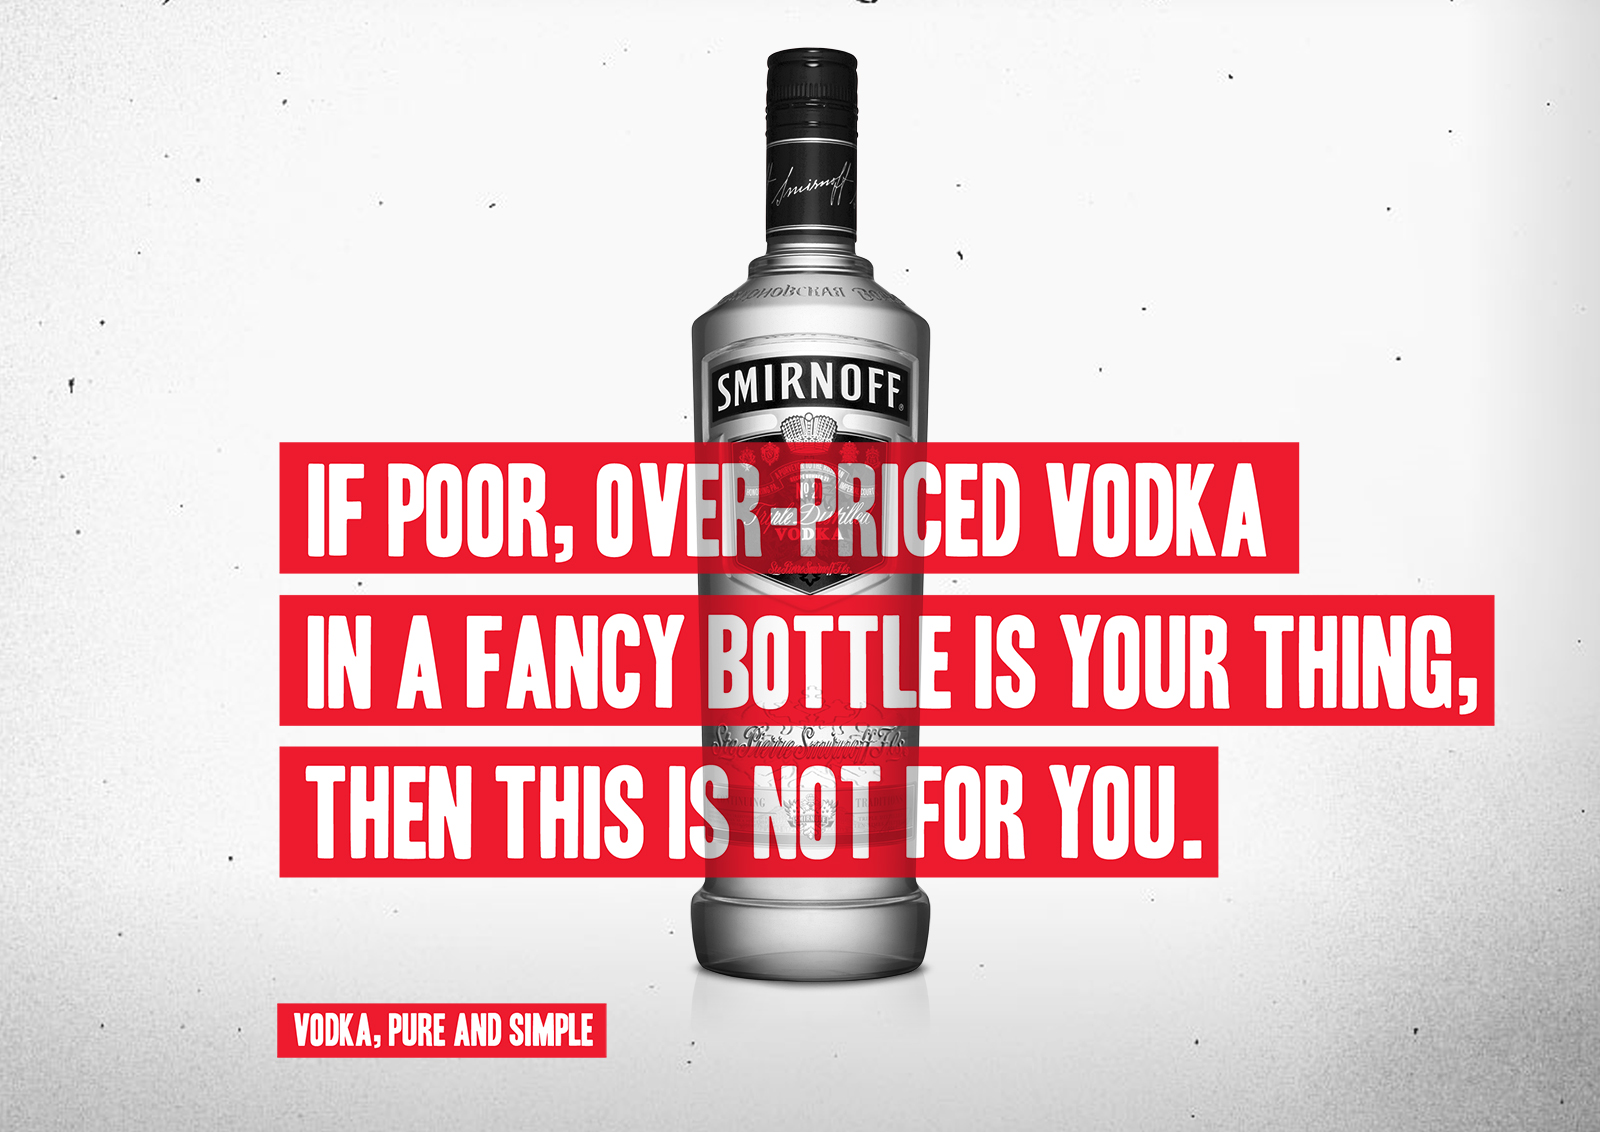 Smirnoff-art-direction-vodka-billboard-james-lee-duffy.jpg